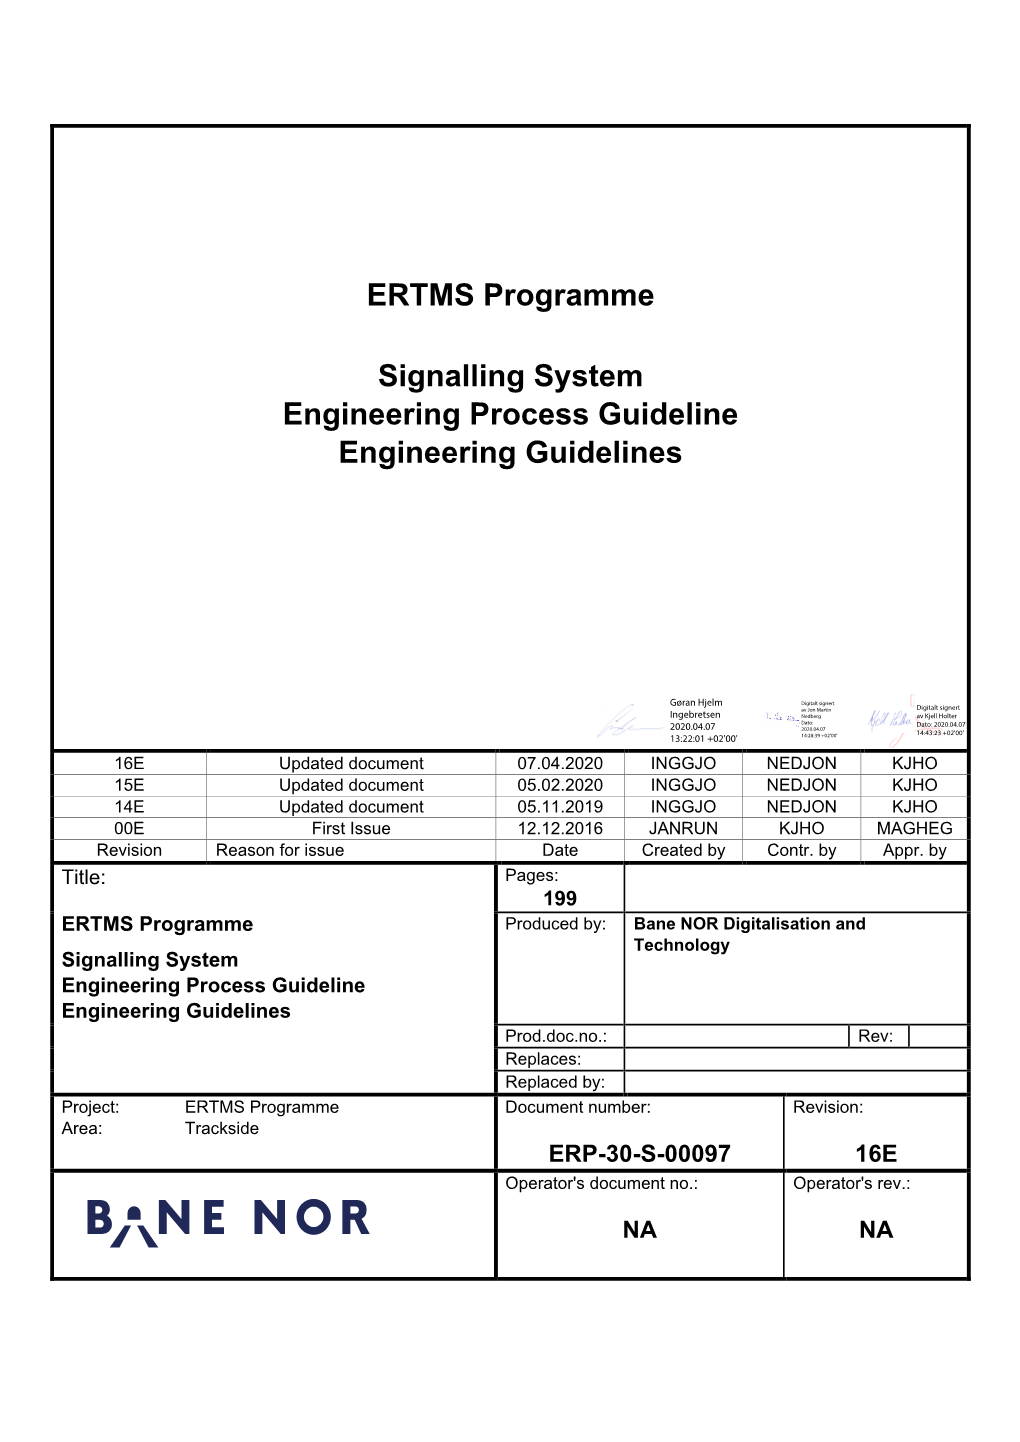 ERTMS Programme Signalling System Engineering Process